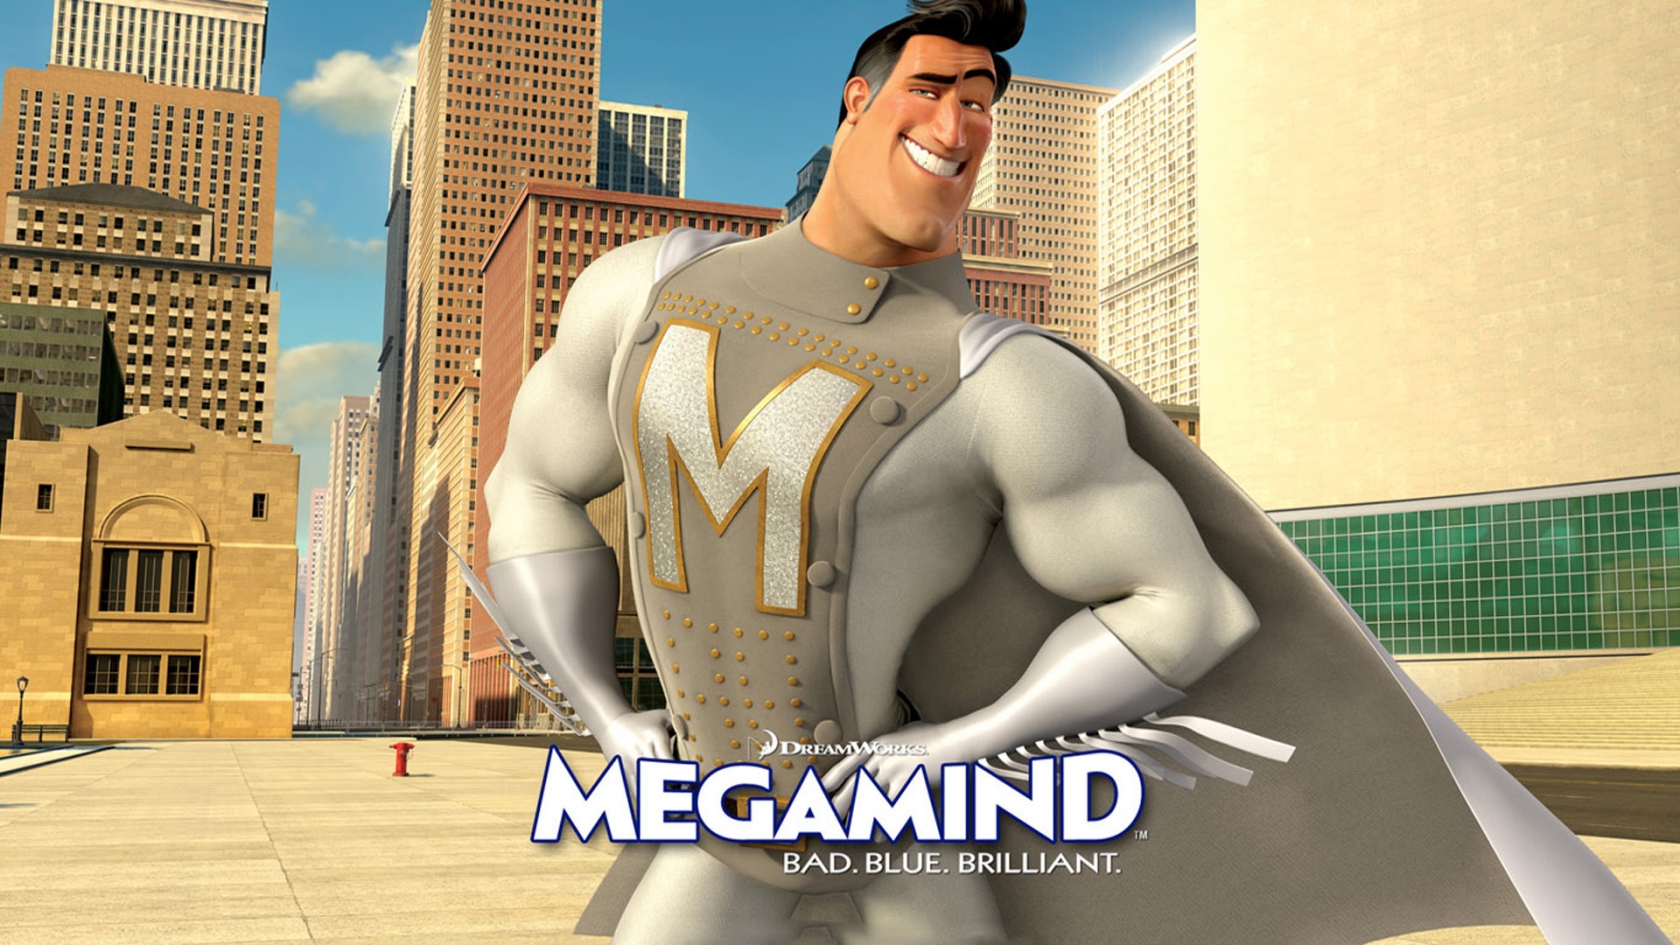 Megamind Metro Man for 1680 x 945 HDTV resolution